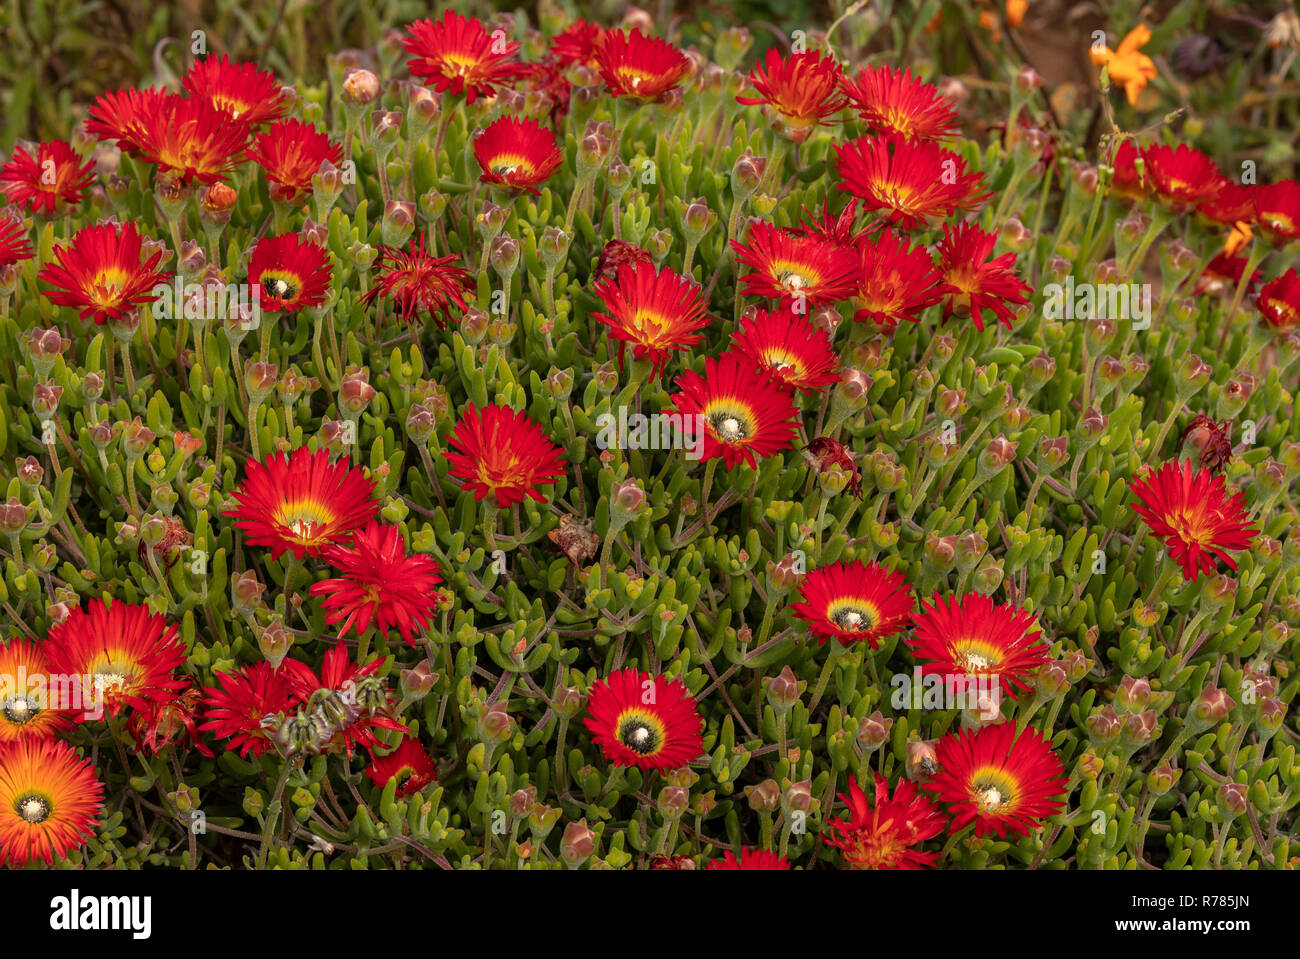 Worcester-Robertson vygie, Drosanthemum speciosum, in full flower in the Karoo, South Africa. Stock Photo